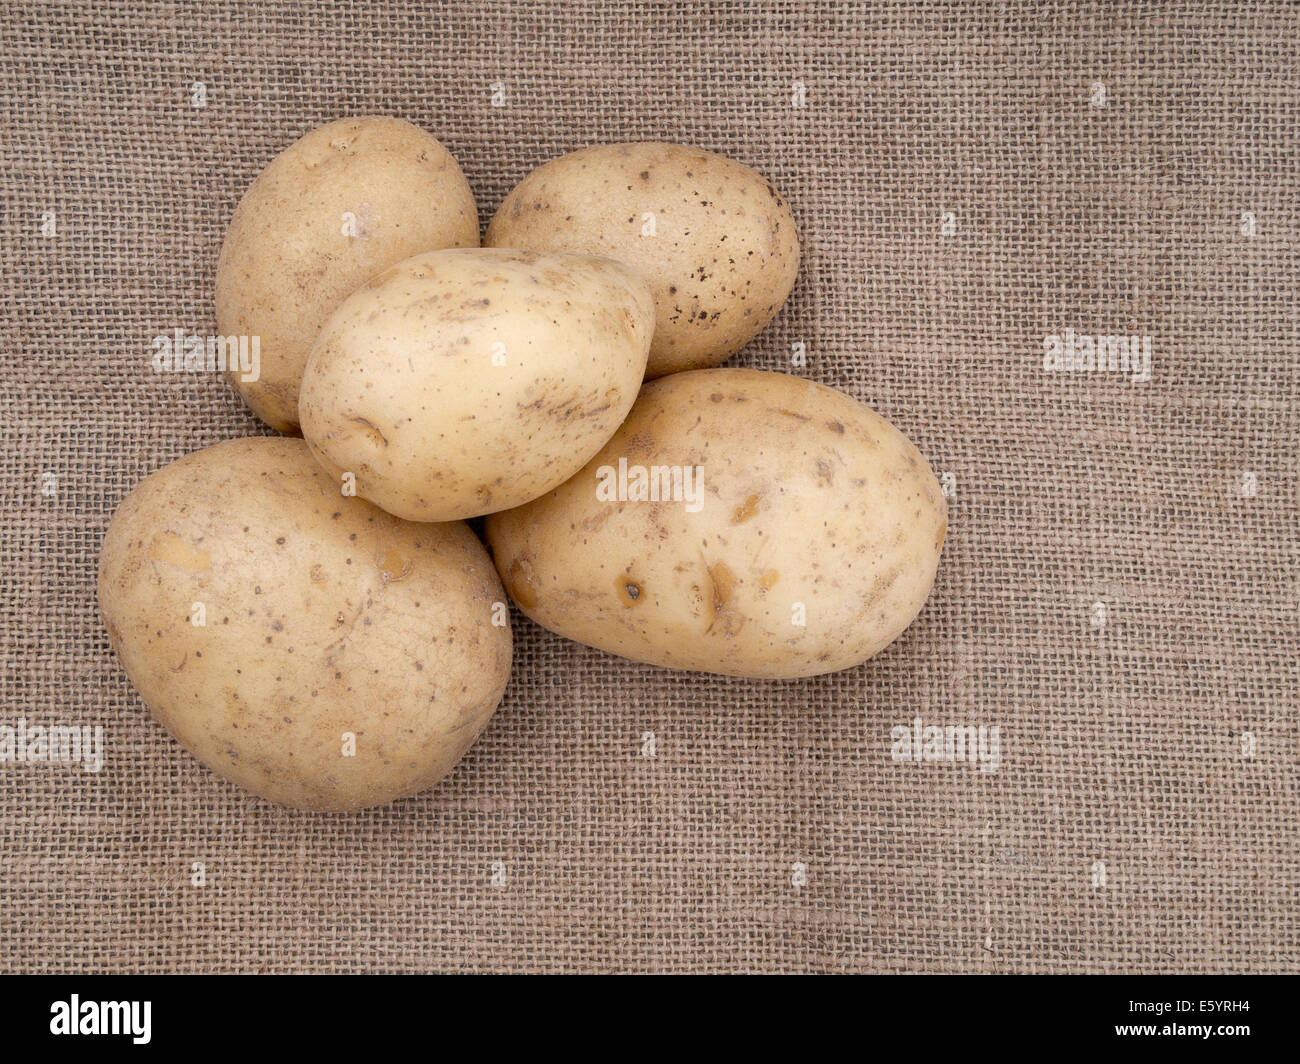 Staple food.Uncooked potatoes on rustic sack, hessian background. Stock Photo